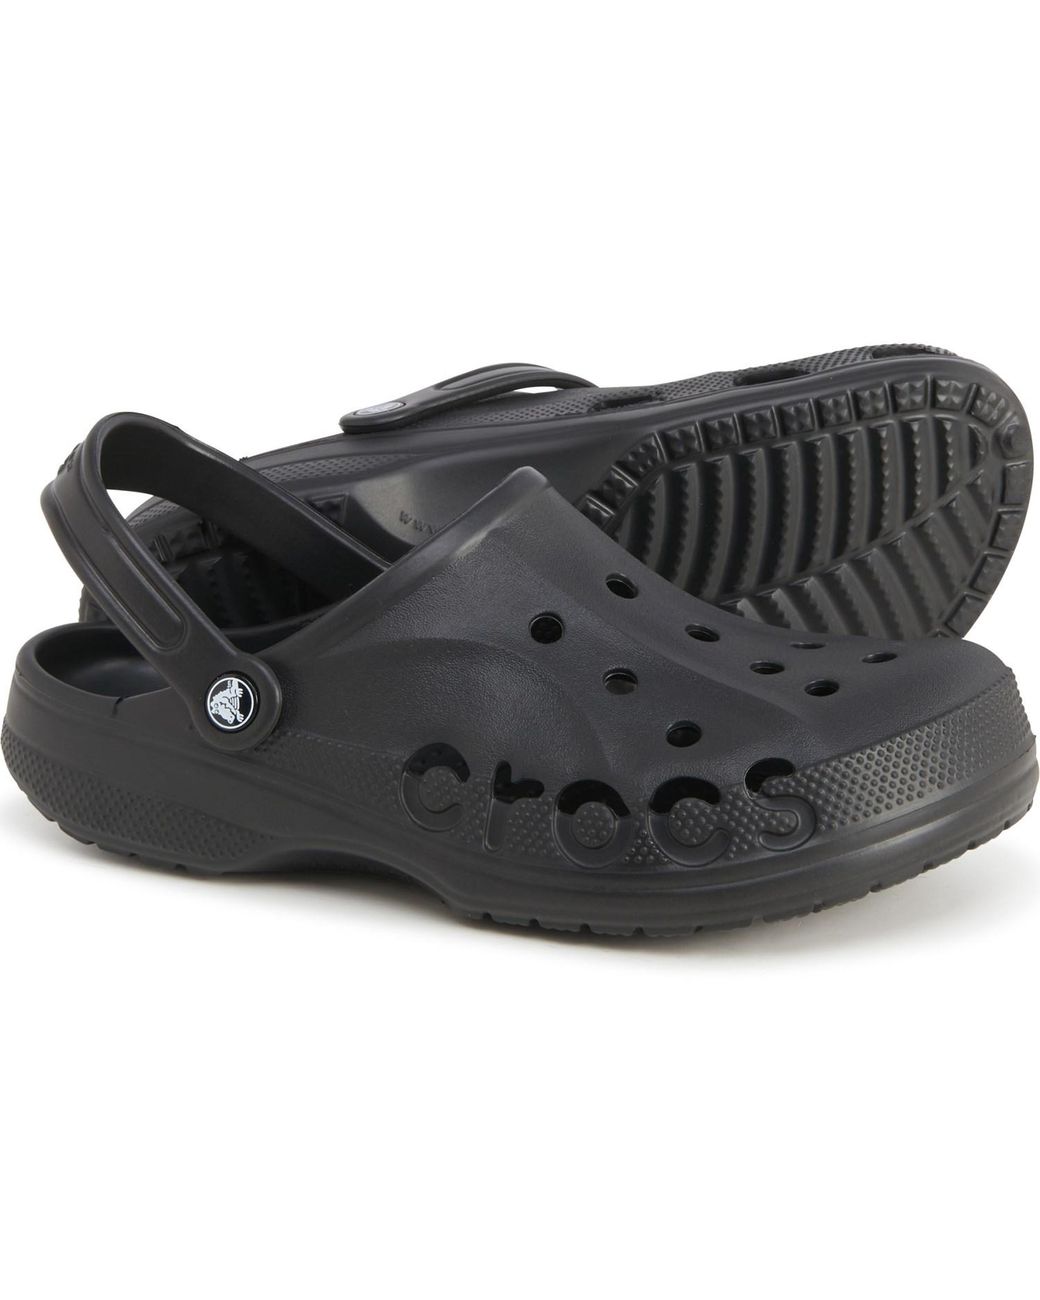 Crocs™ Baya Clogs in Black for Men - Lyst